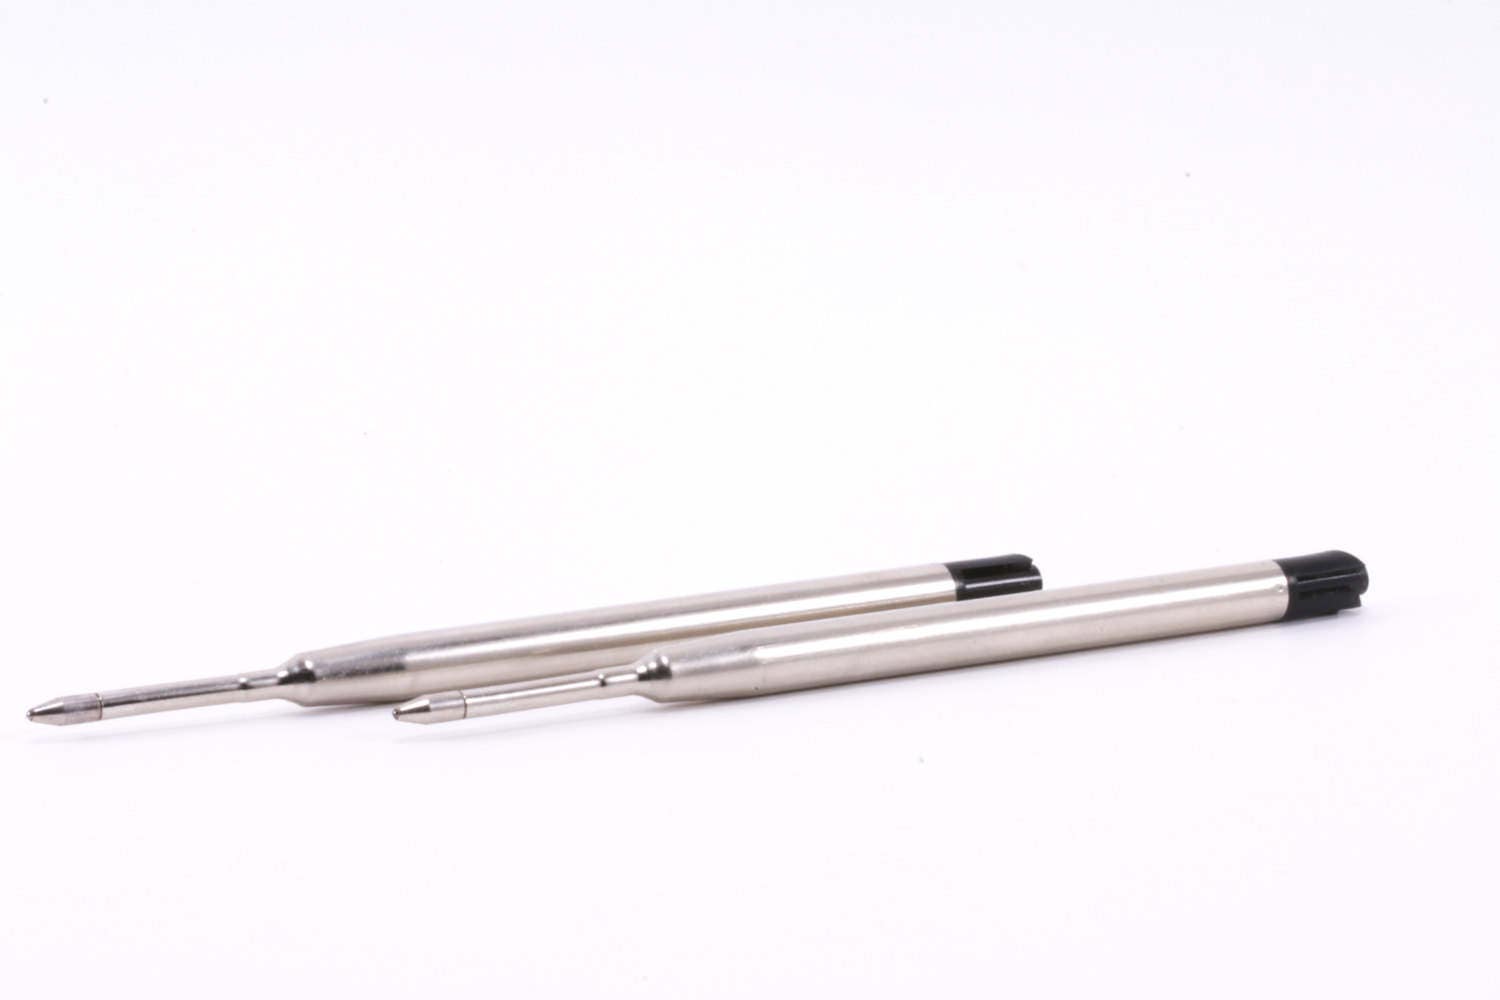 Cross-style black ink refill(Short) - 10 pack - Strongink Pen Kits